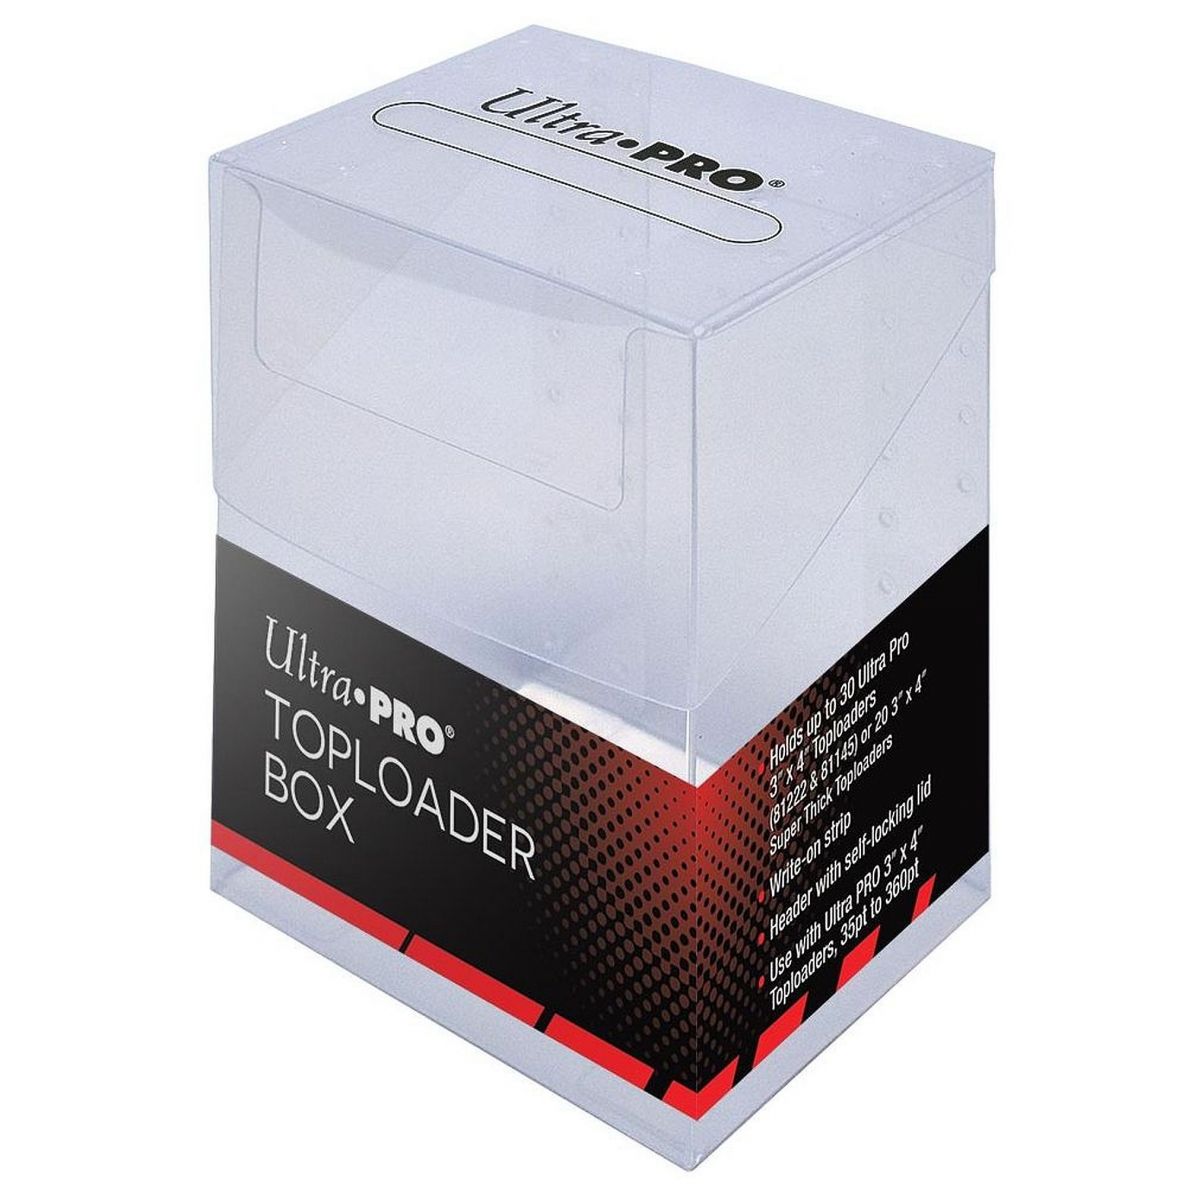 Ultra Pro - Deck Box - Top loader Box